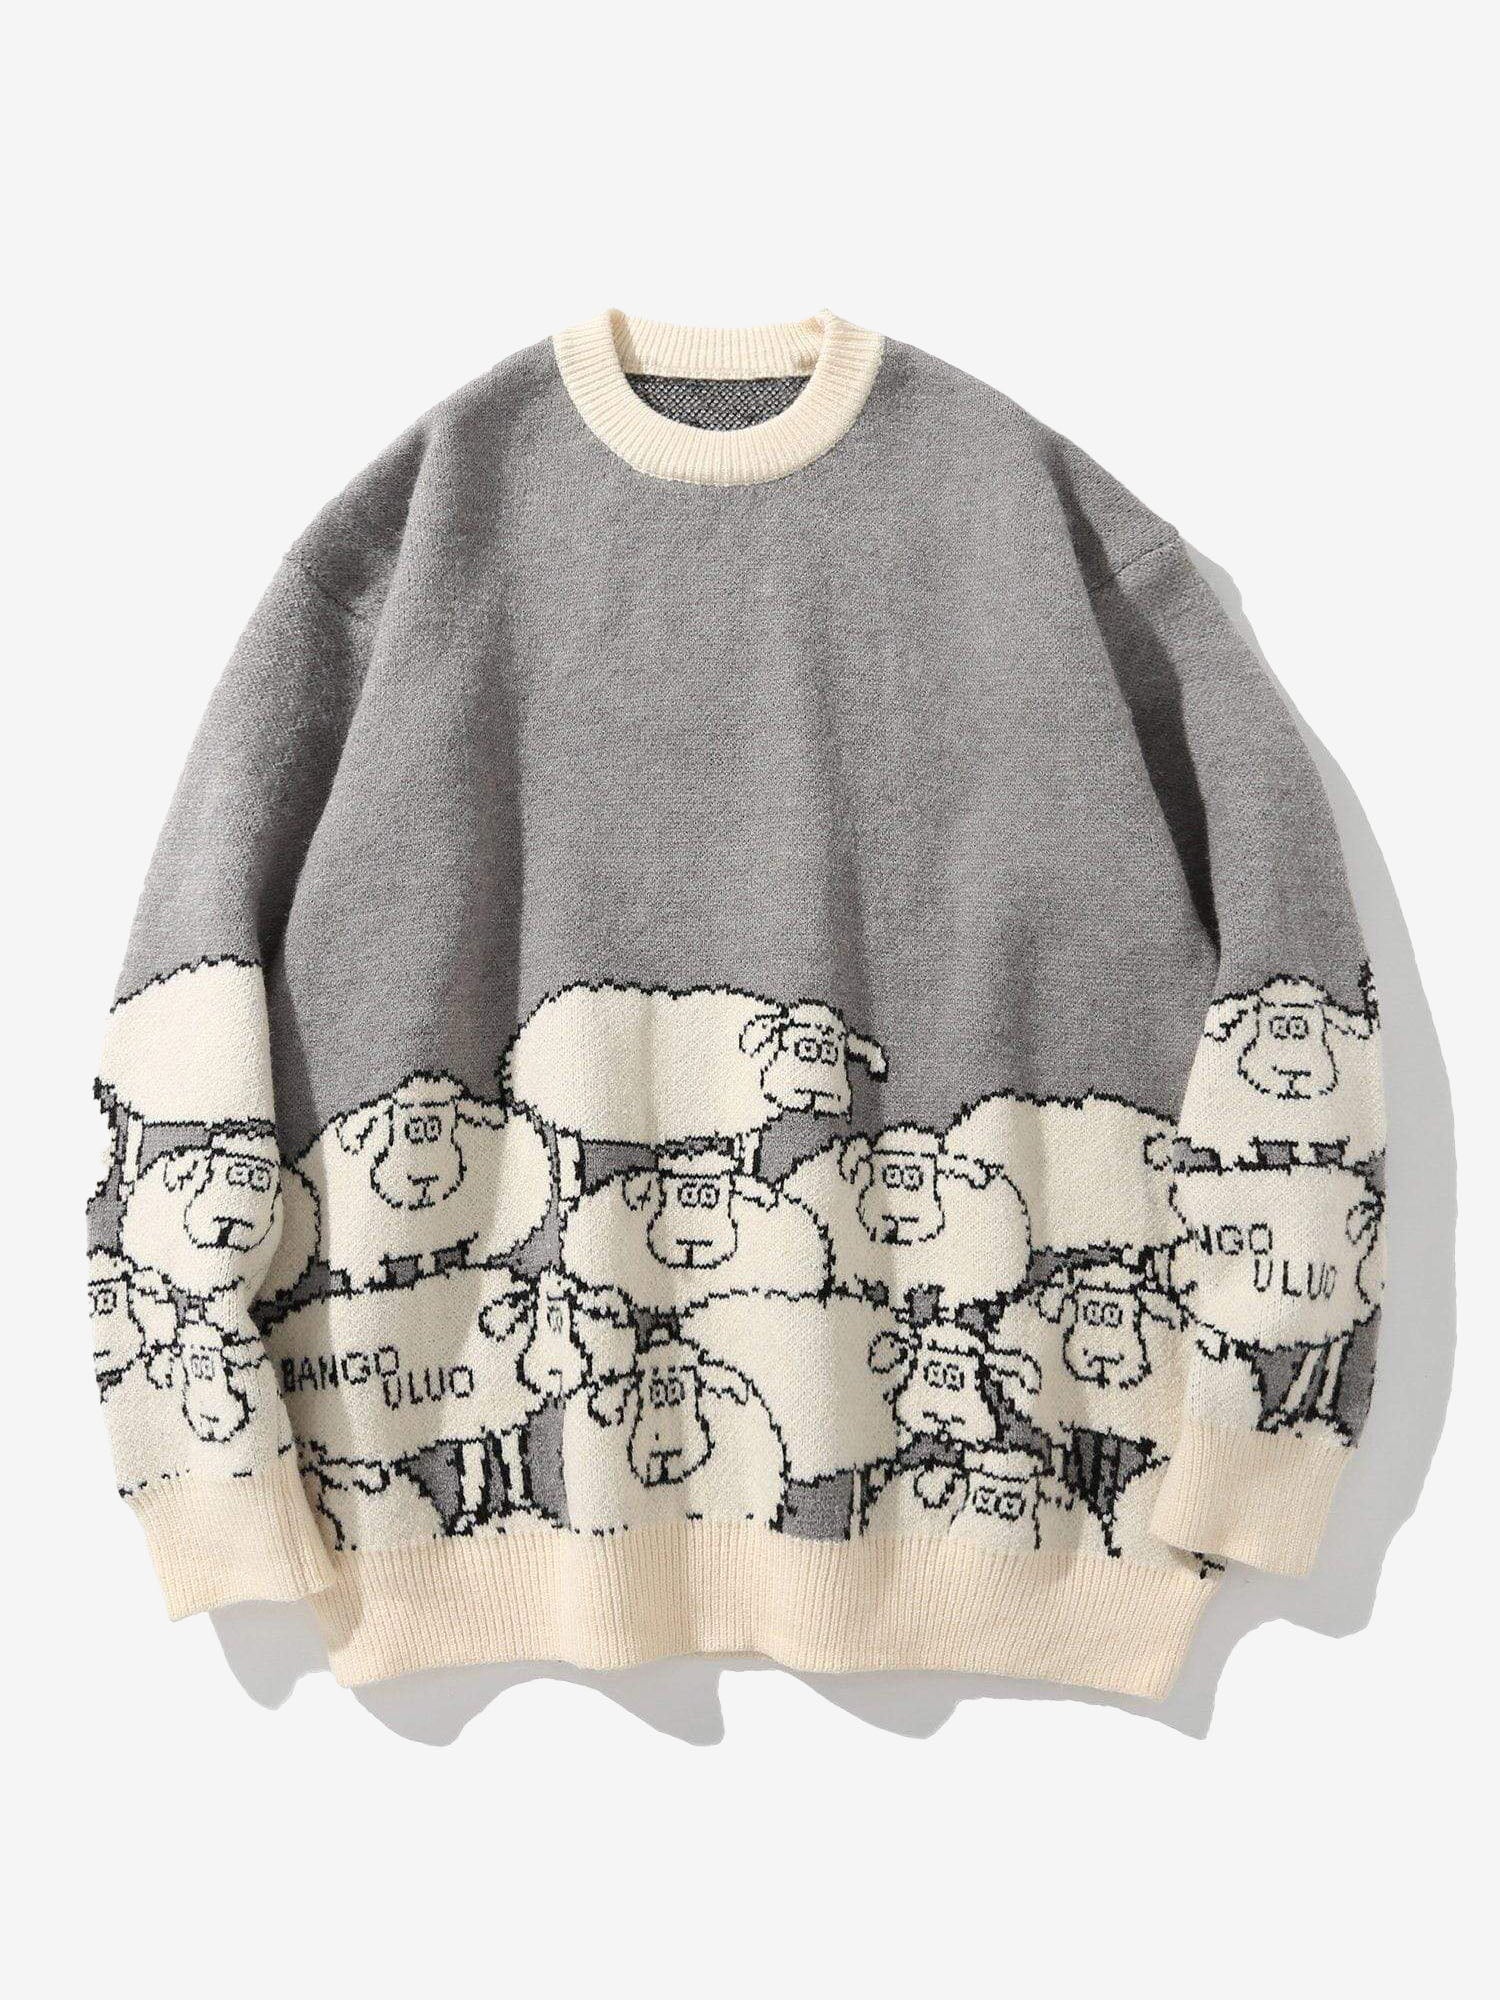 JUSTNOTAG Vintage Cartoon Sheep Print Sweaters